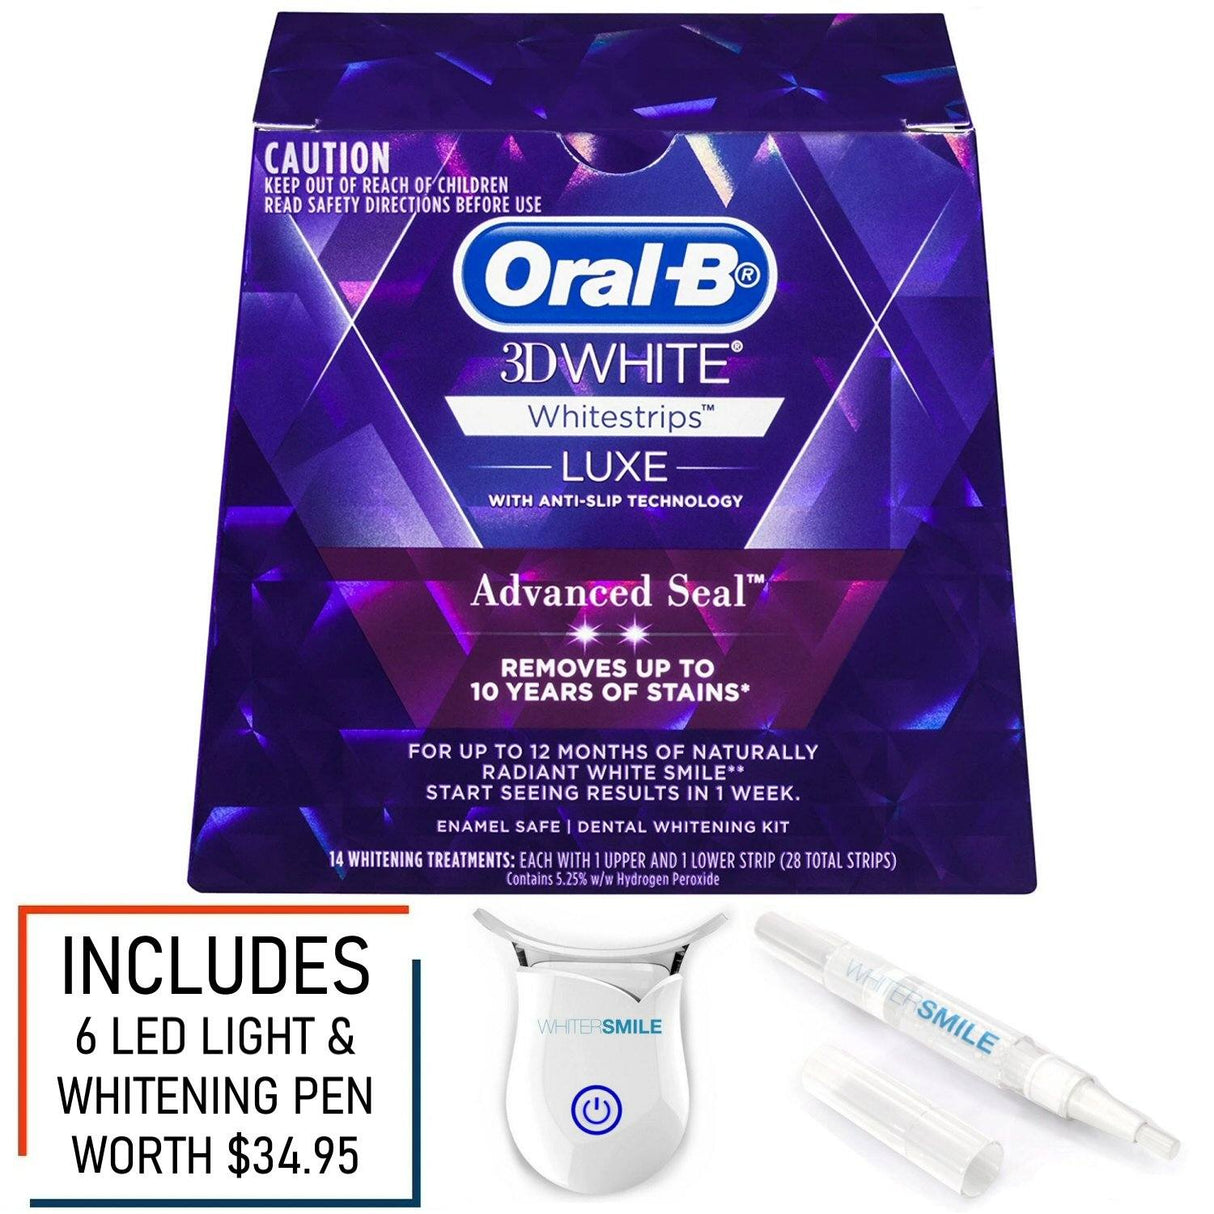 Oral B Whitestrips LUXE 5.25% HP + Bonus LED Light & Top Up Pen Oral B 